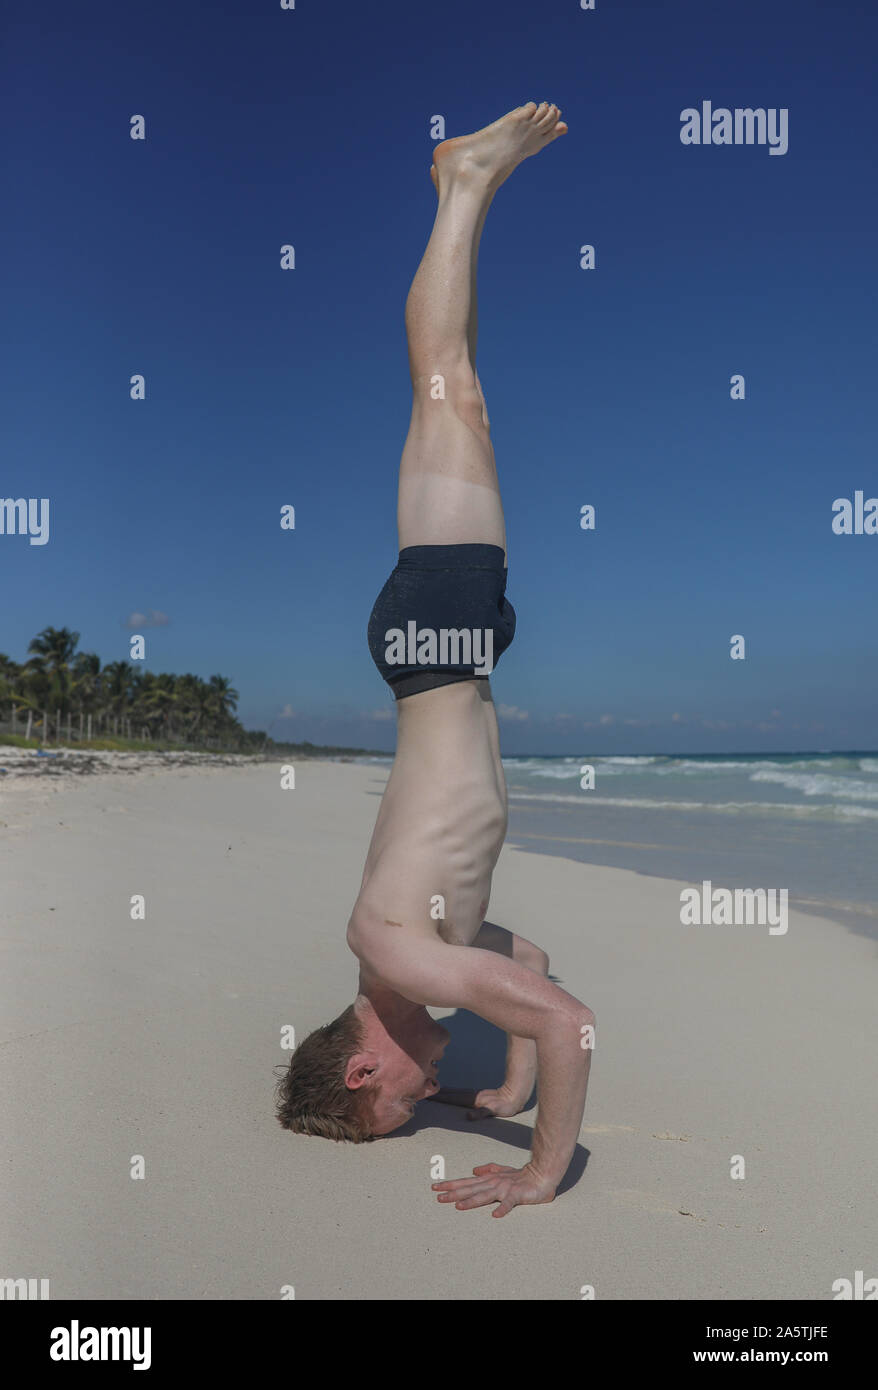 Man doing headstand on beach Stock Photo